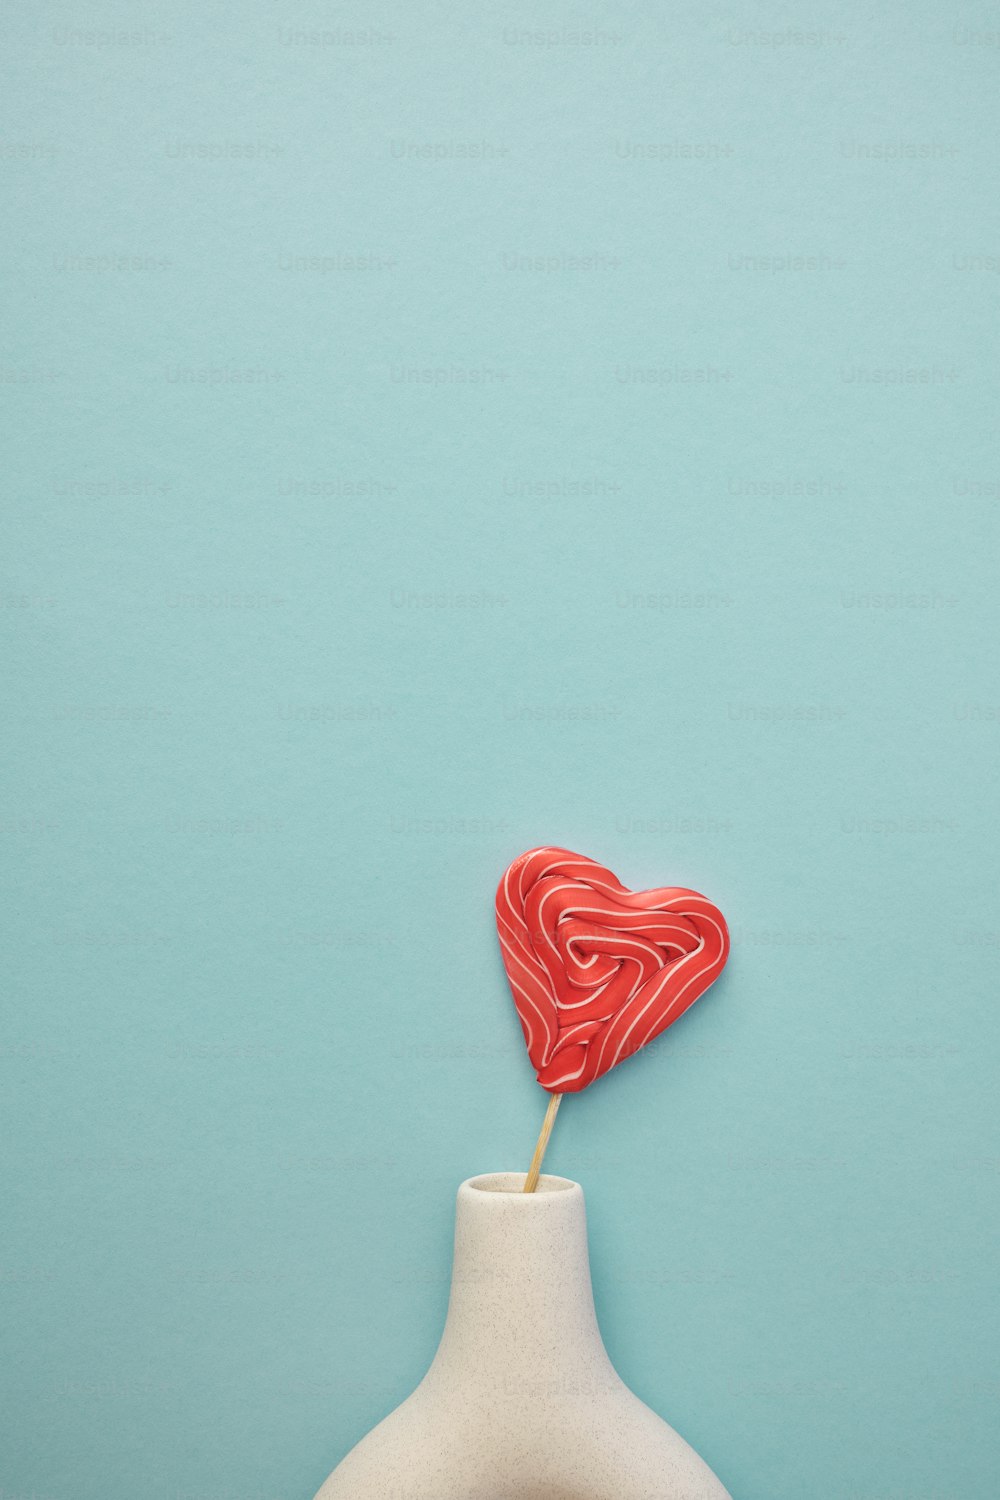 a heart shaped lollipop on a stick in a vase